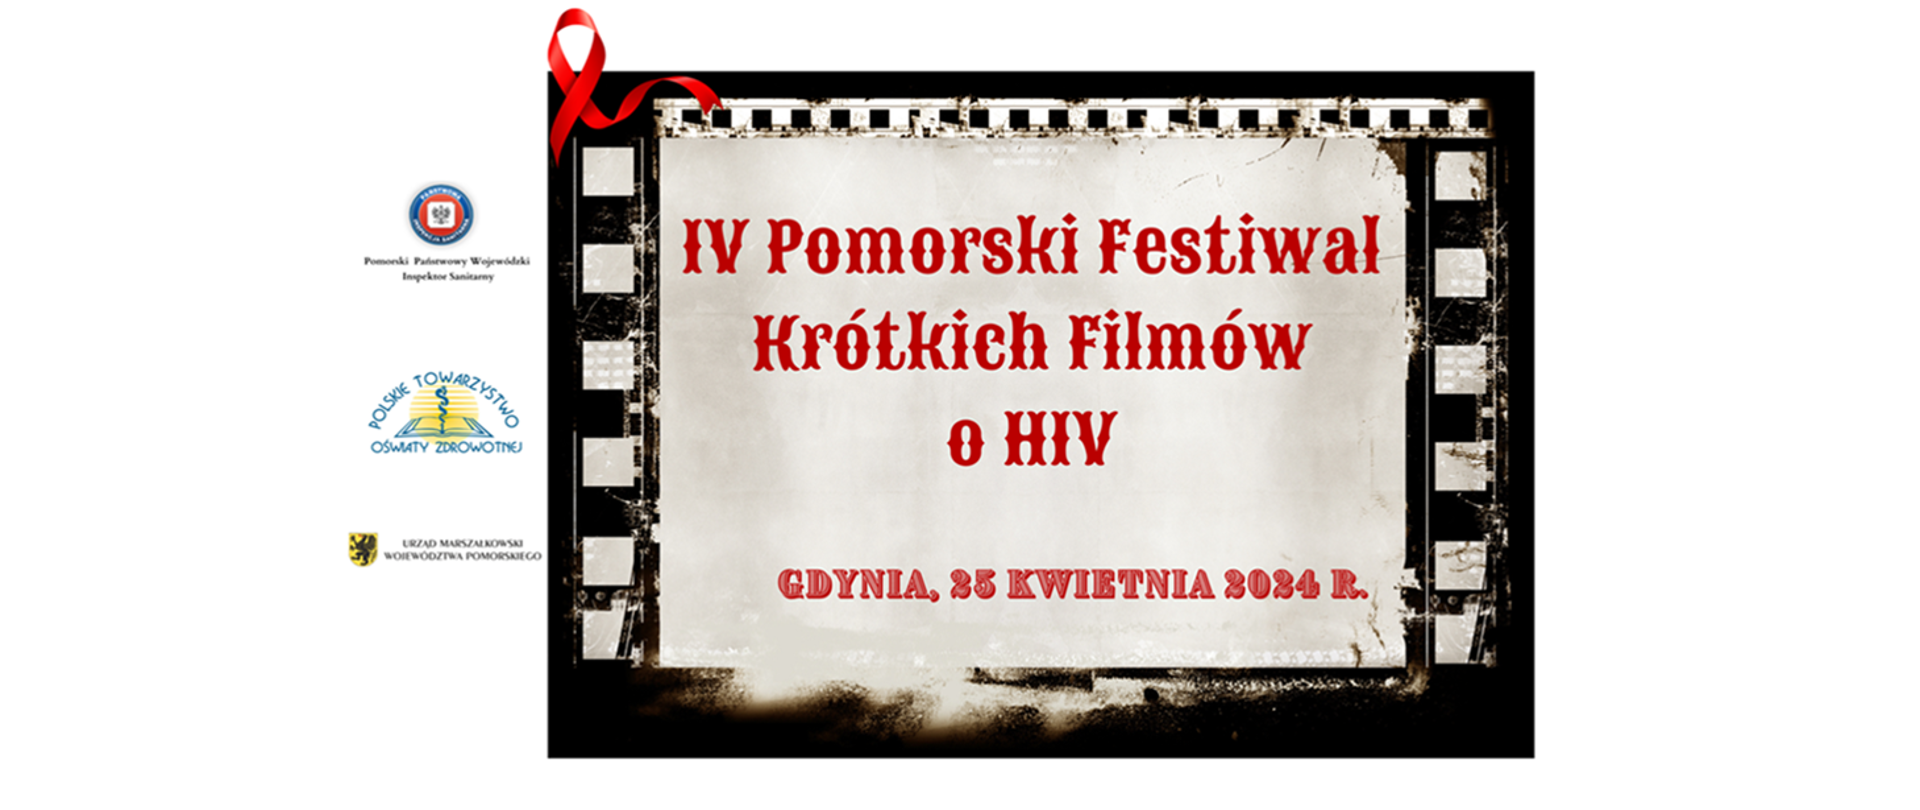 IV Pomorski Festiwal Krótkich Filmów o HIV.